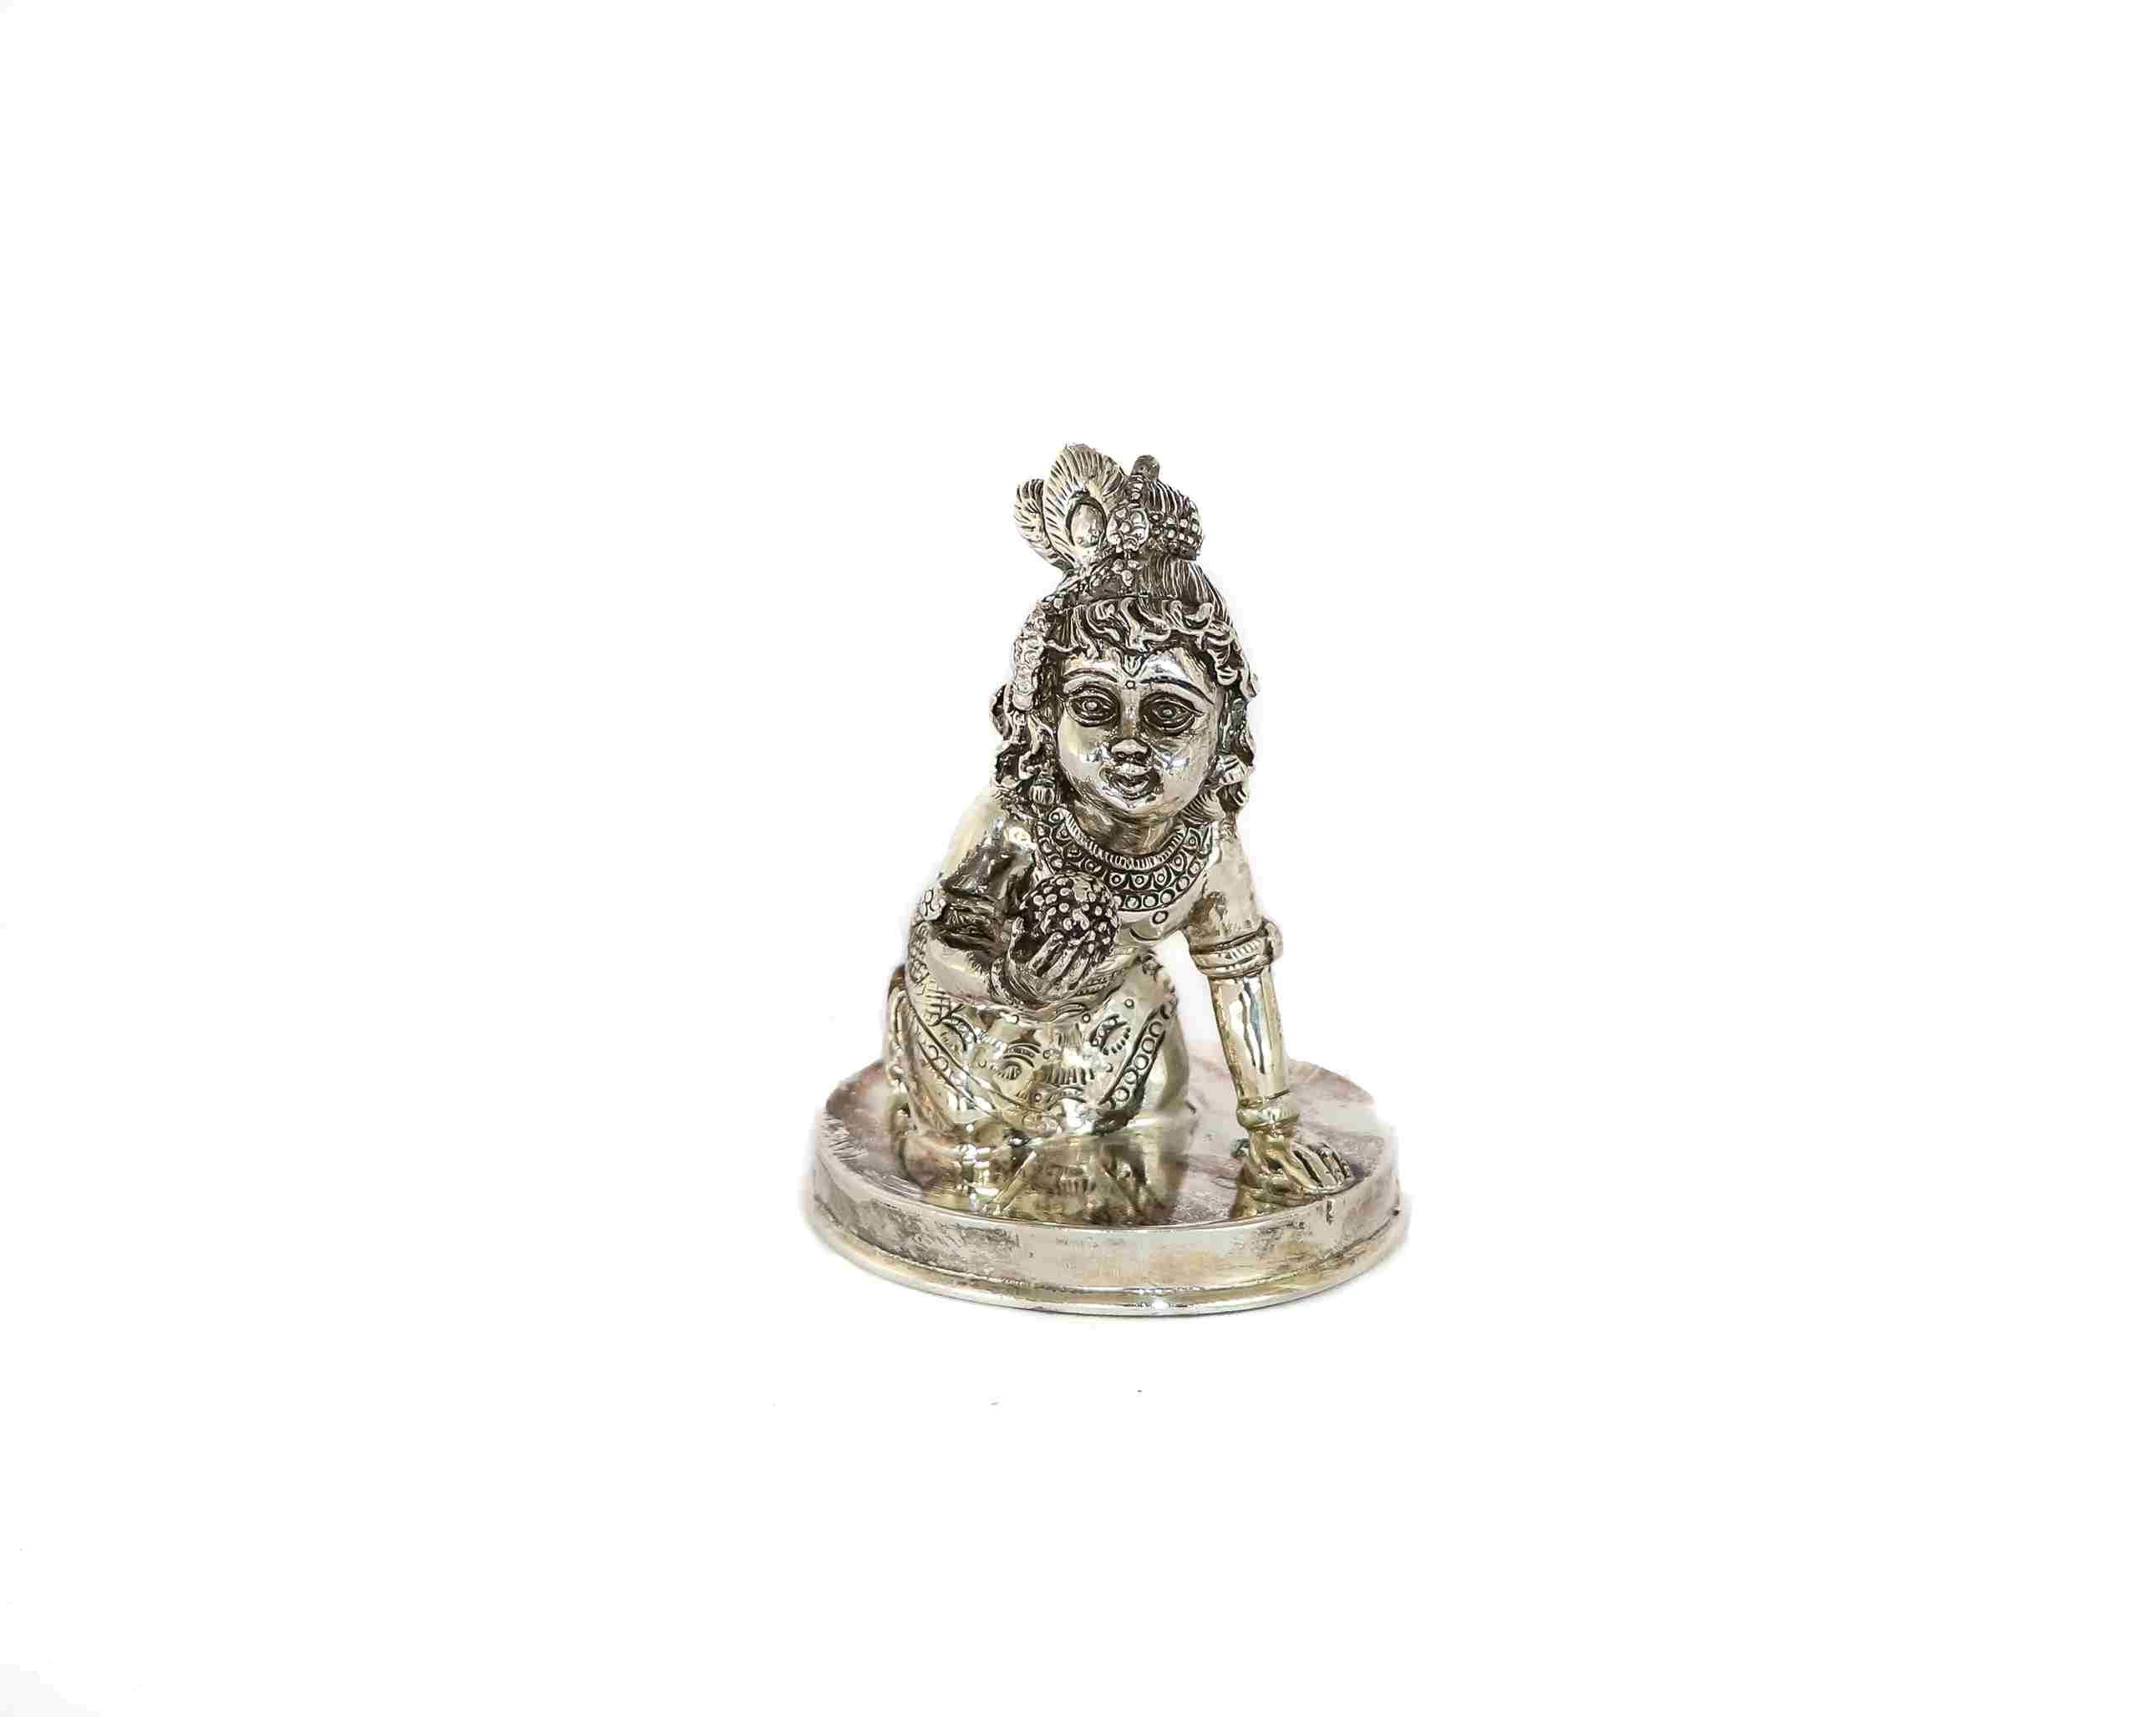 Solid silver krishna idol